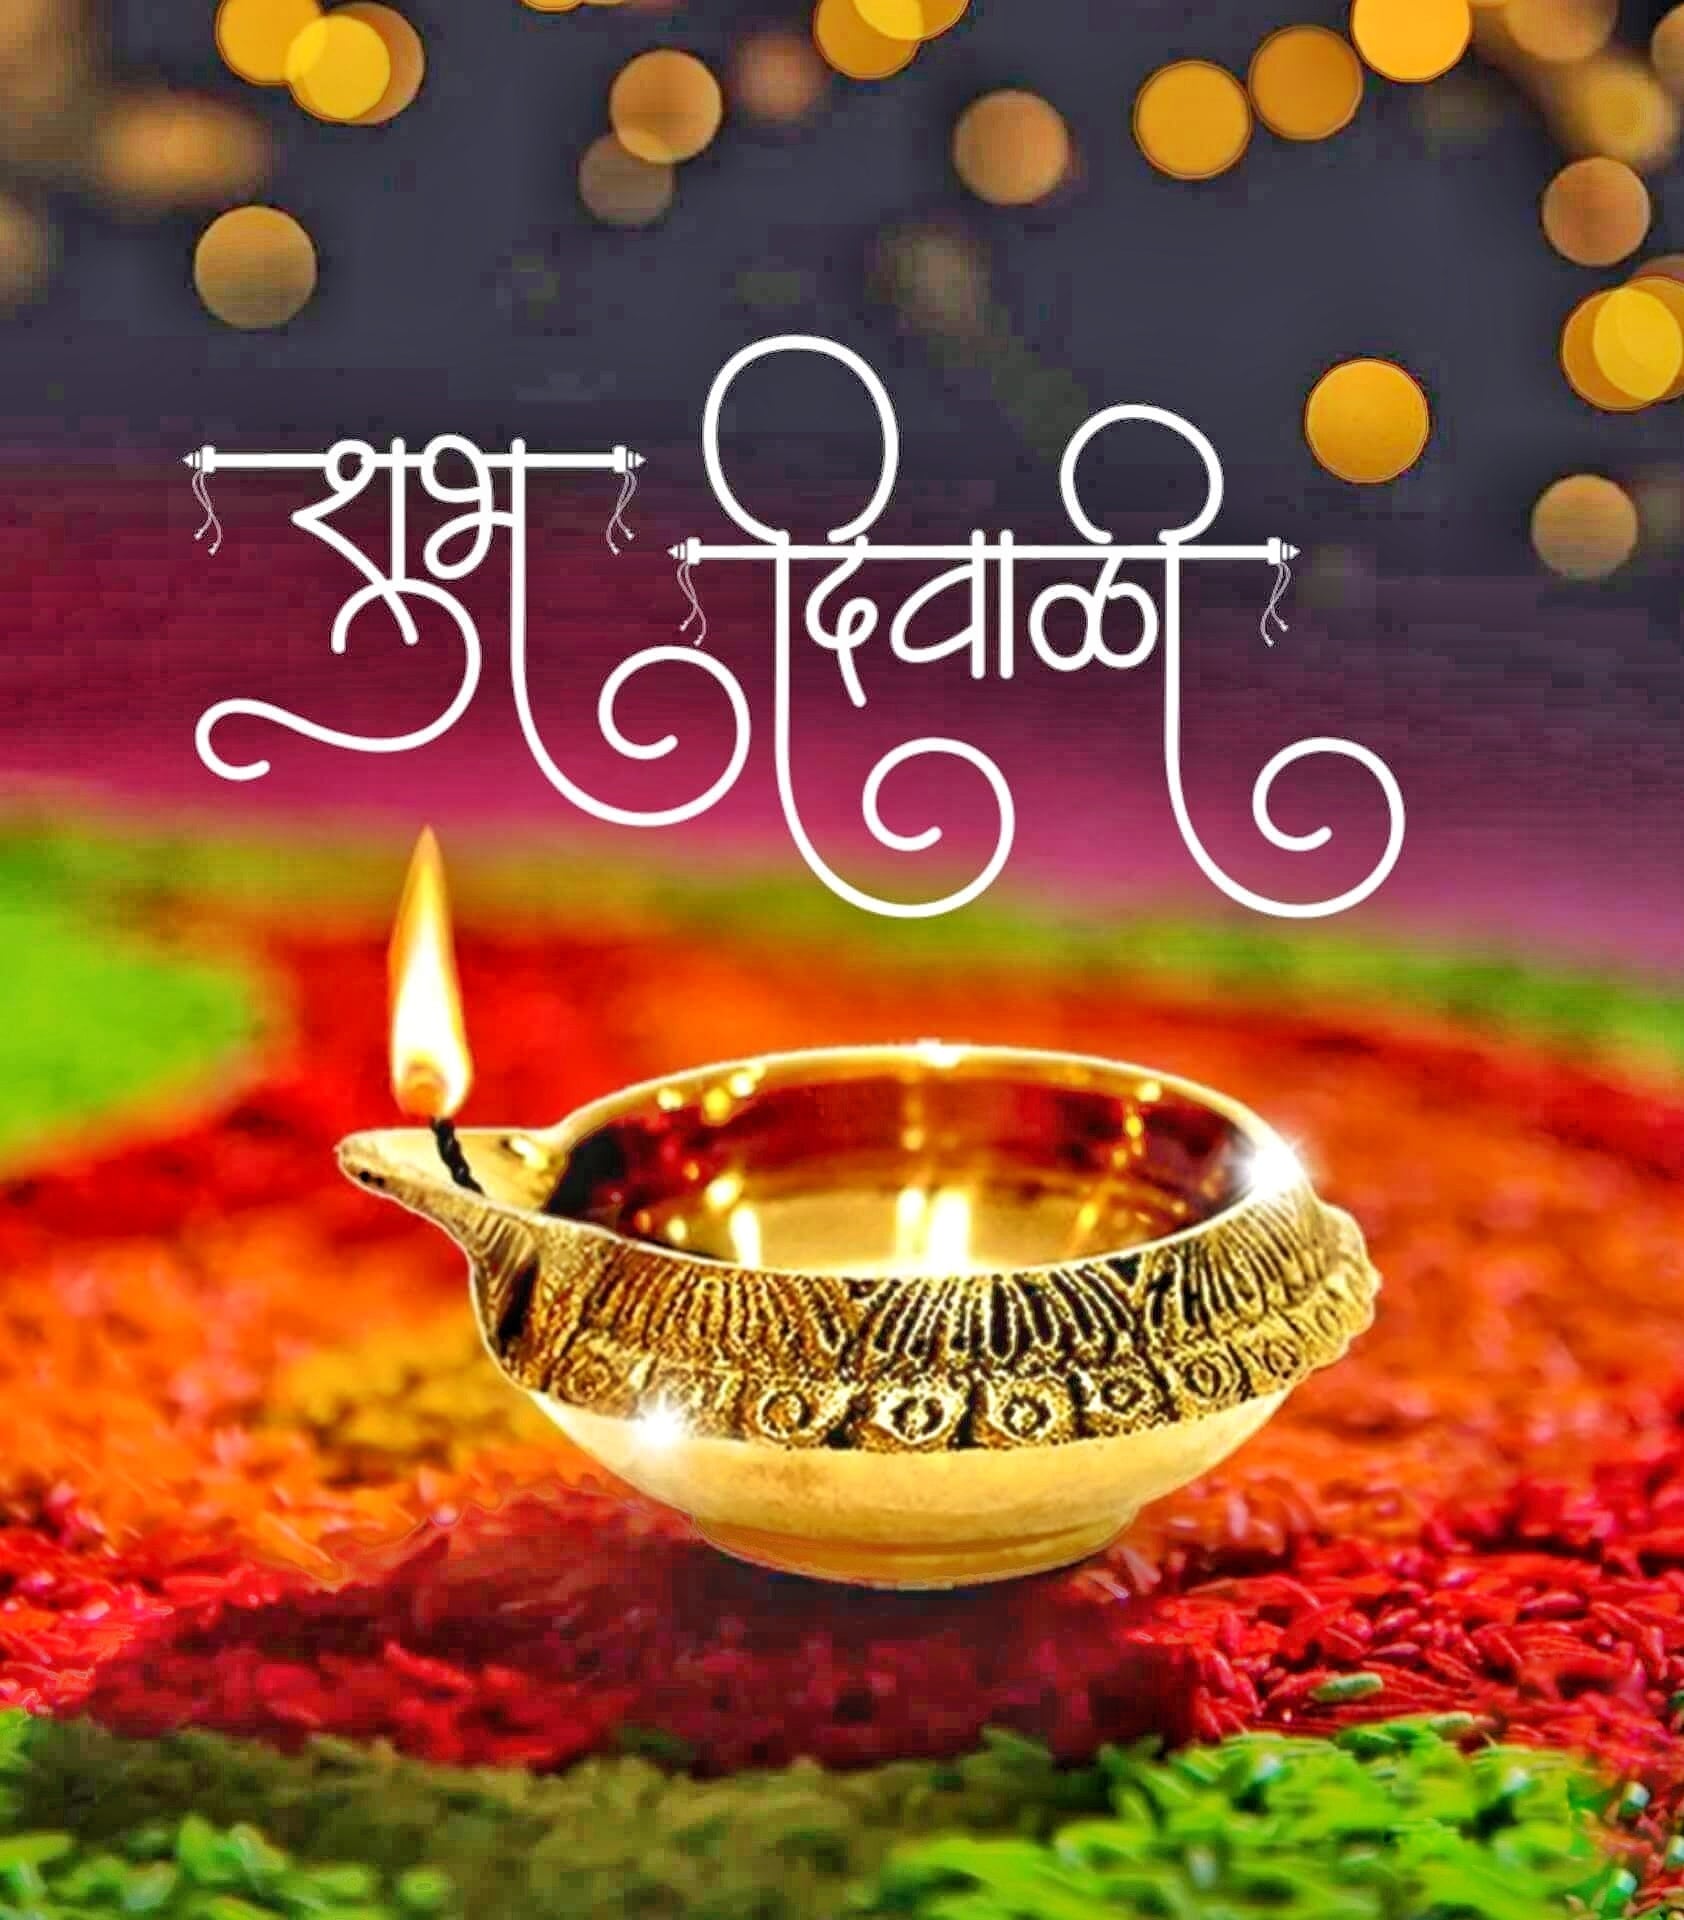 Happy Diwali Image Full HD Free